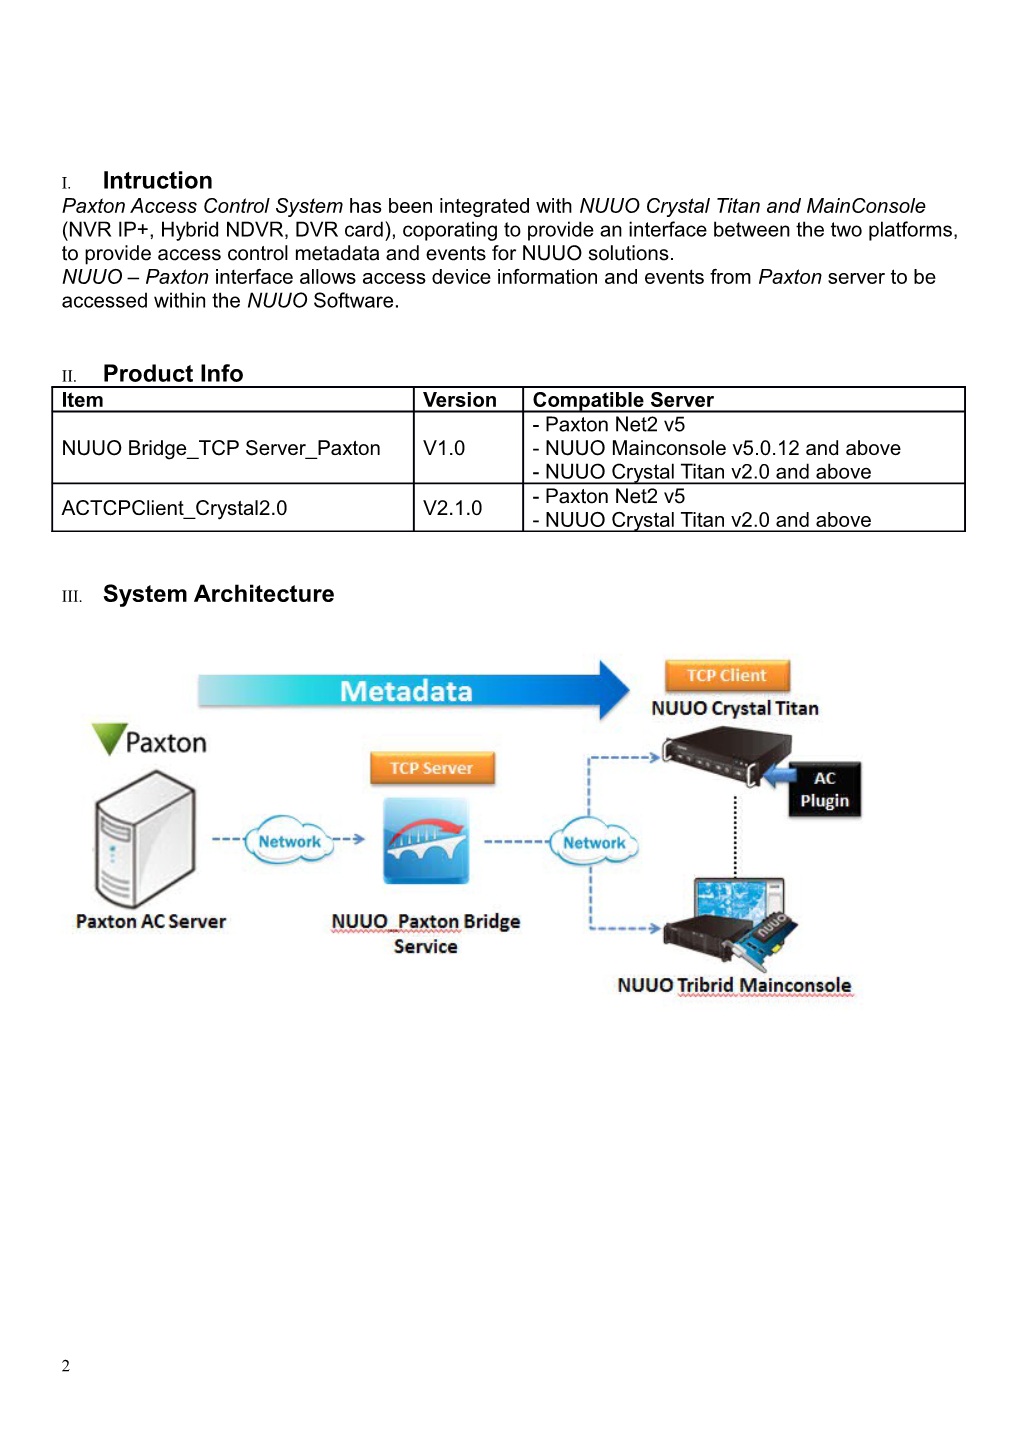 IV.NUUO Bridge TCP Server Paxton Setup